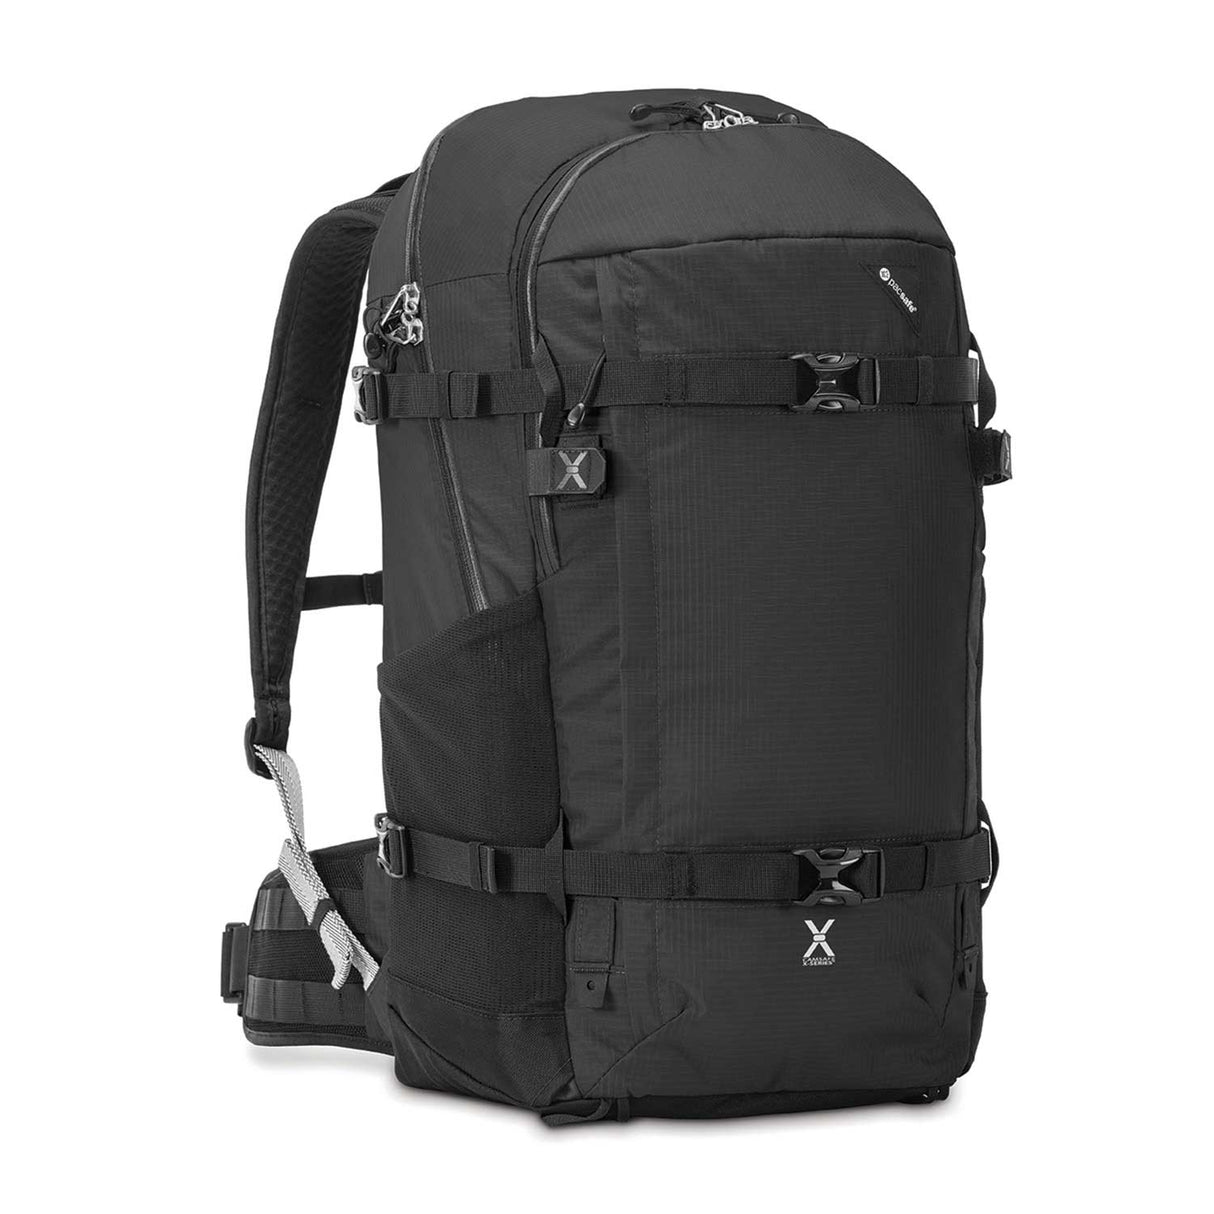 Pacsafe Venturesafe X40 Plus 40 litre backpack